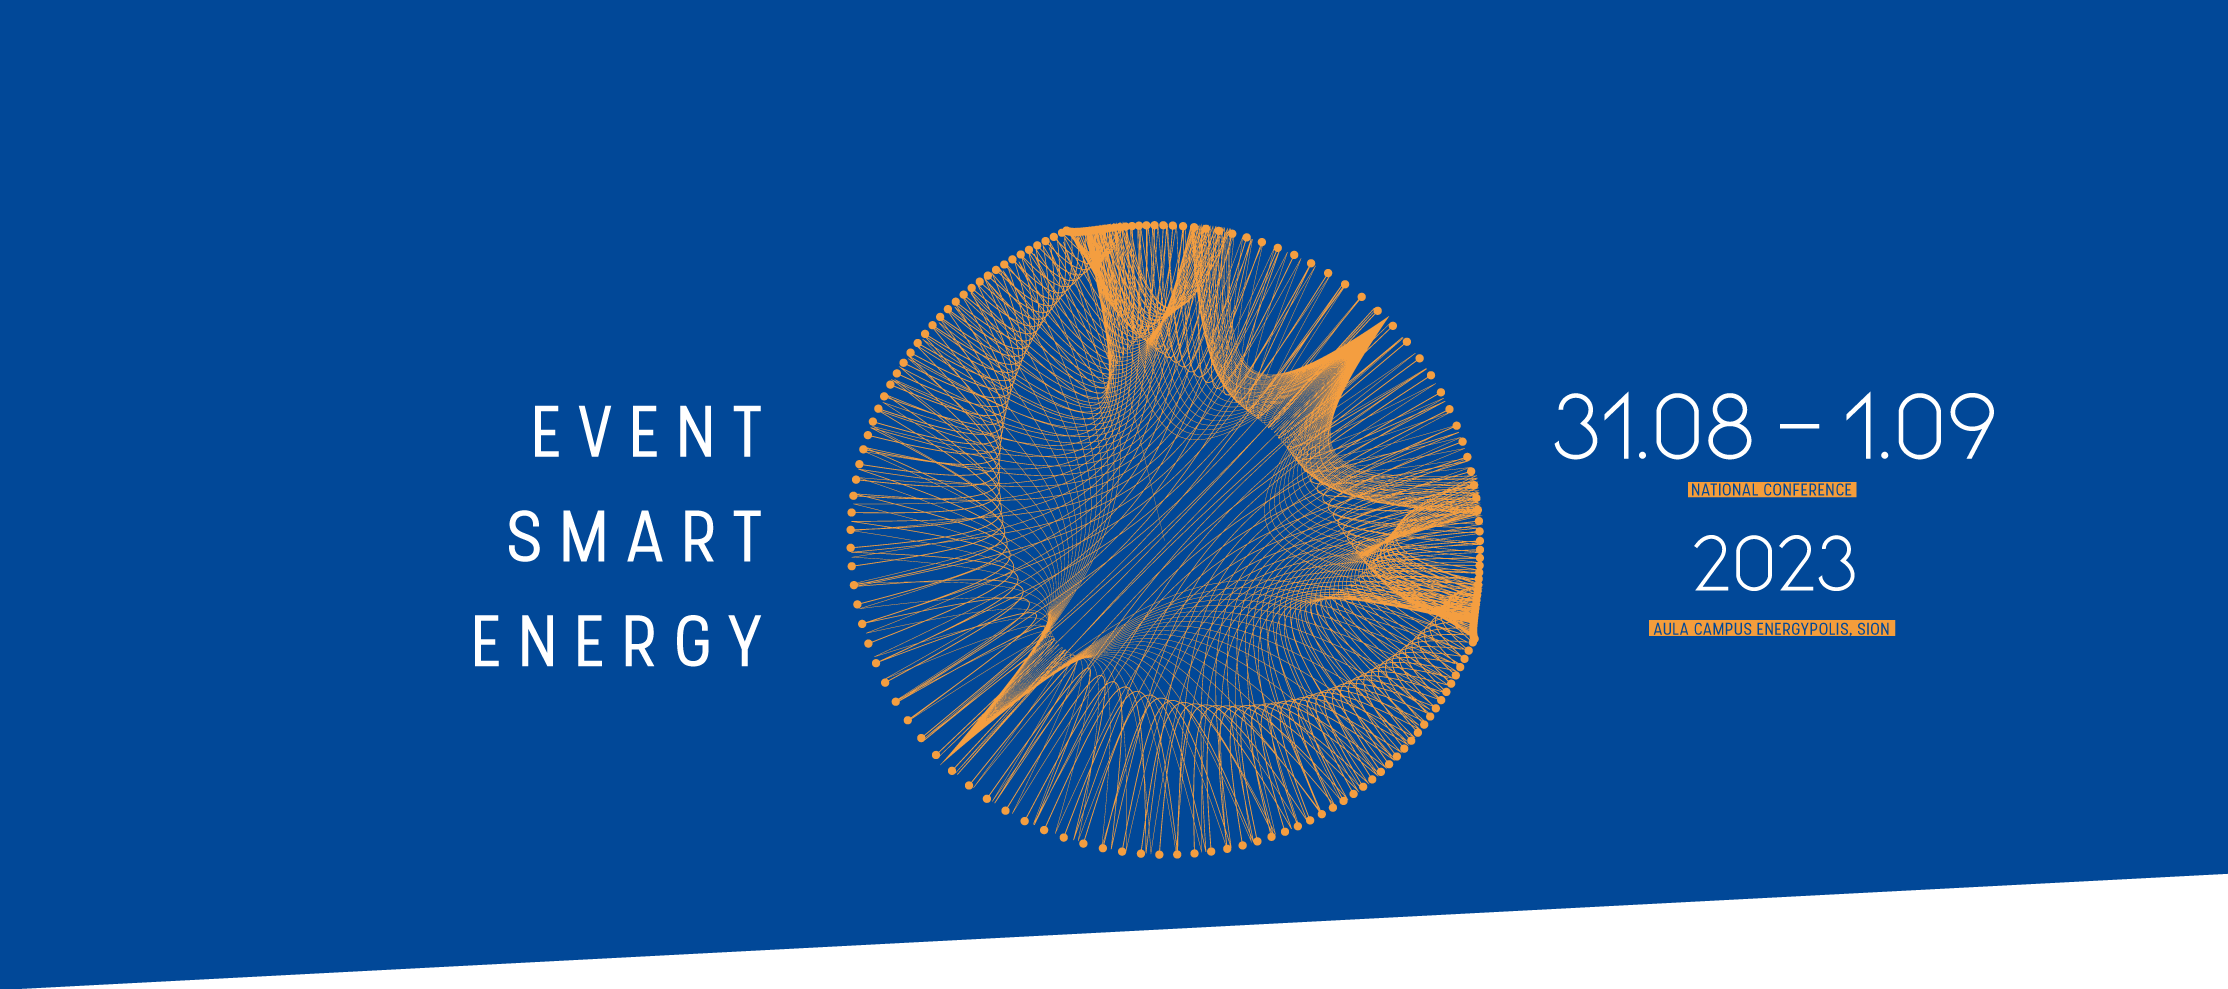 Event Smart Energy